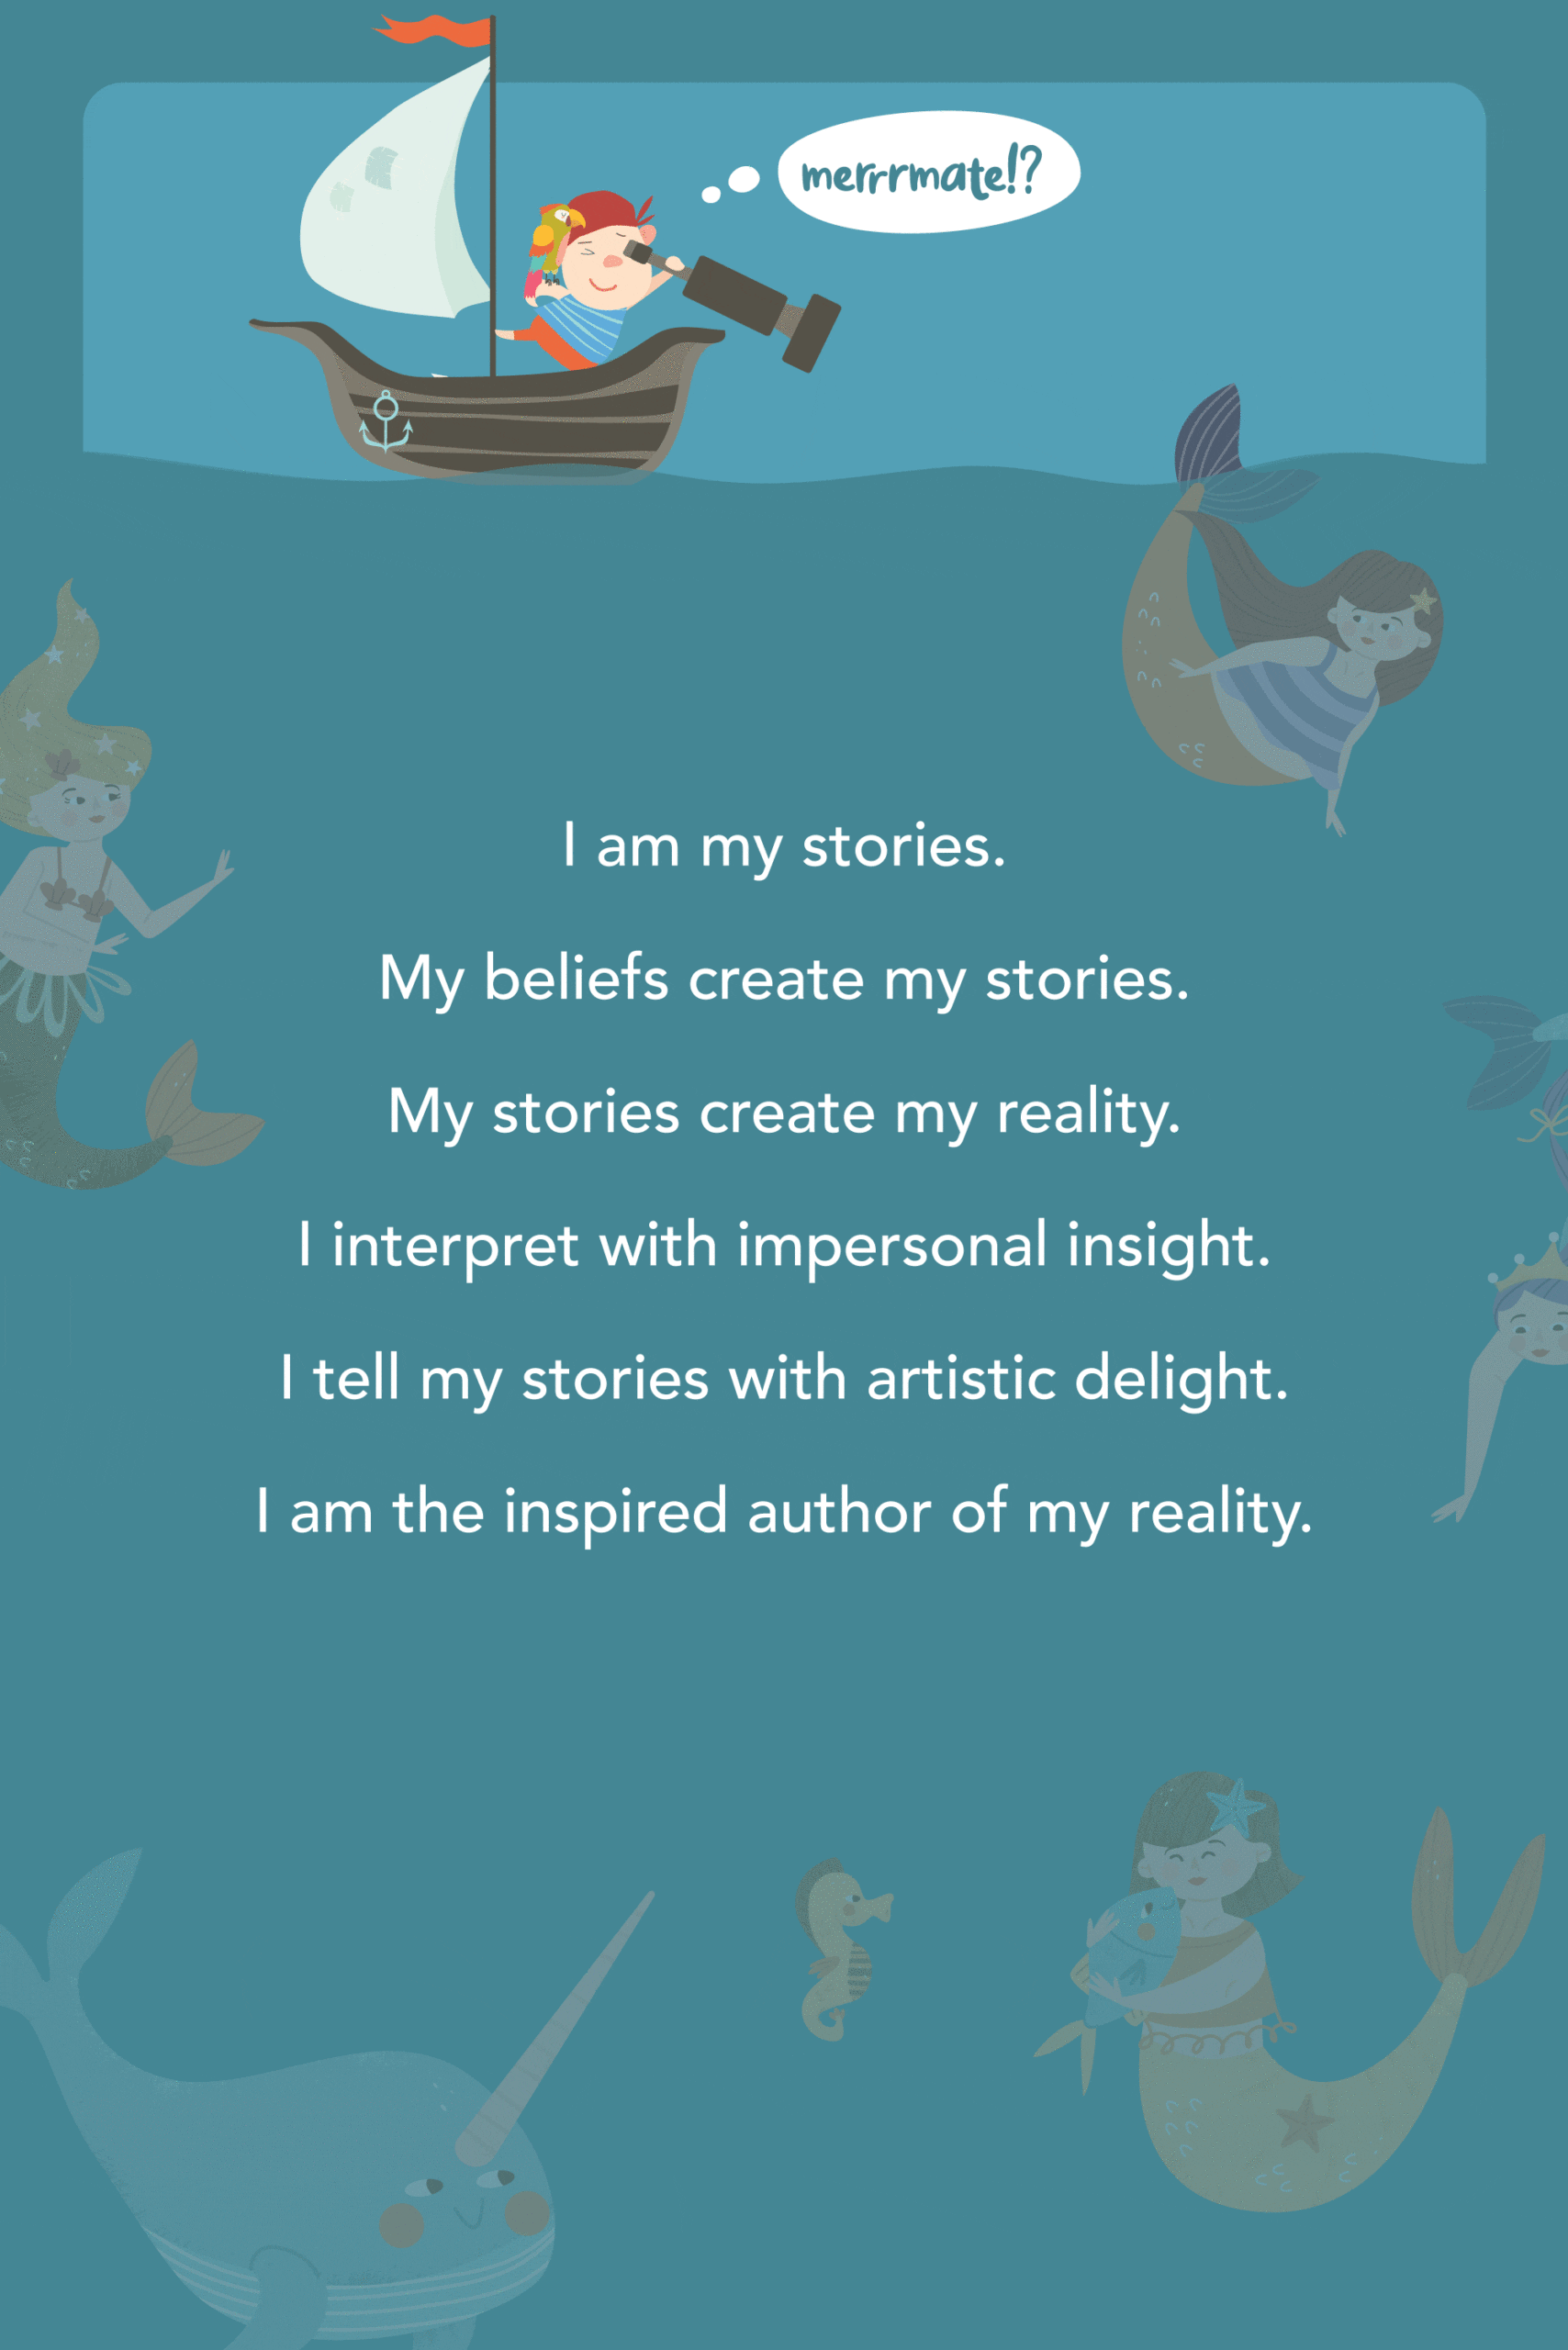 I am my stories affirmation